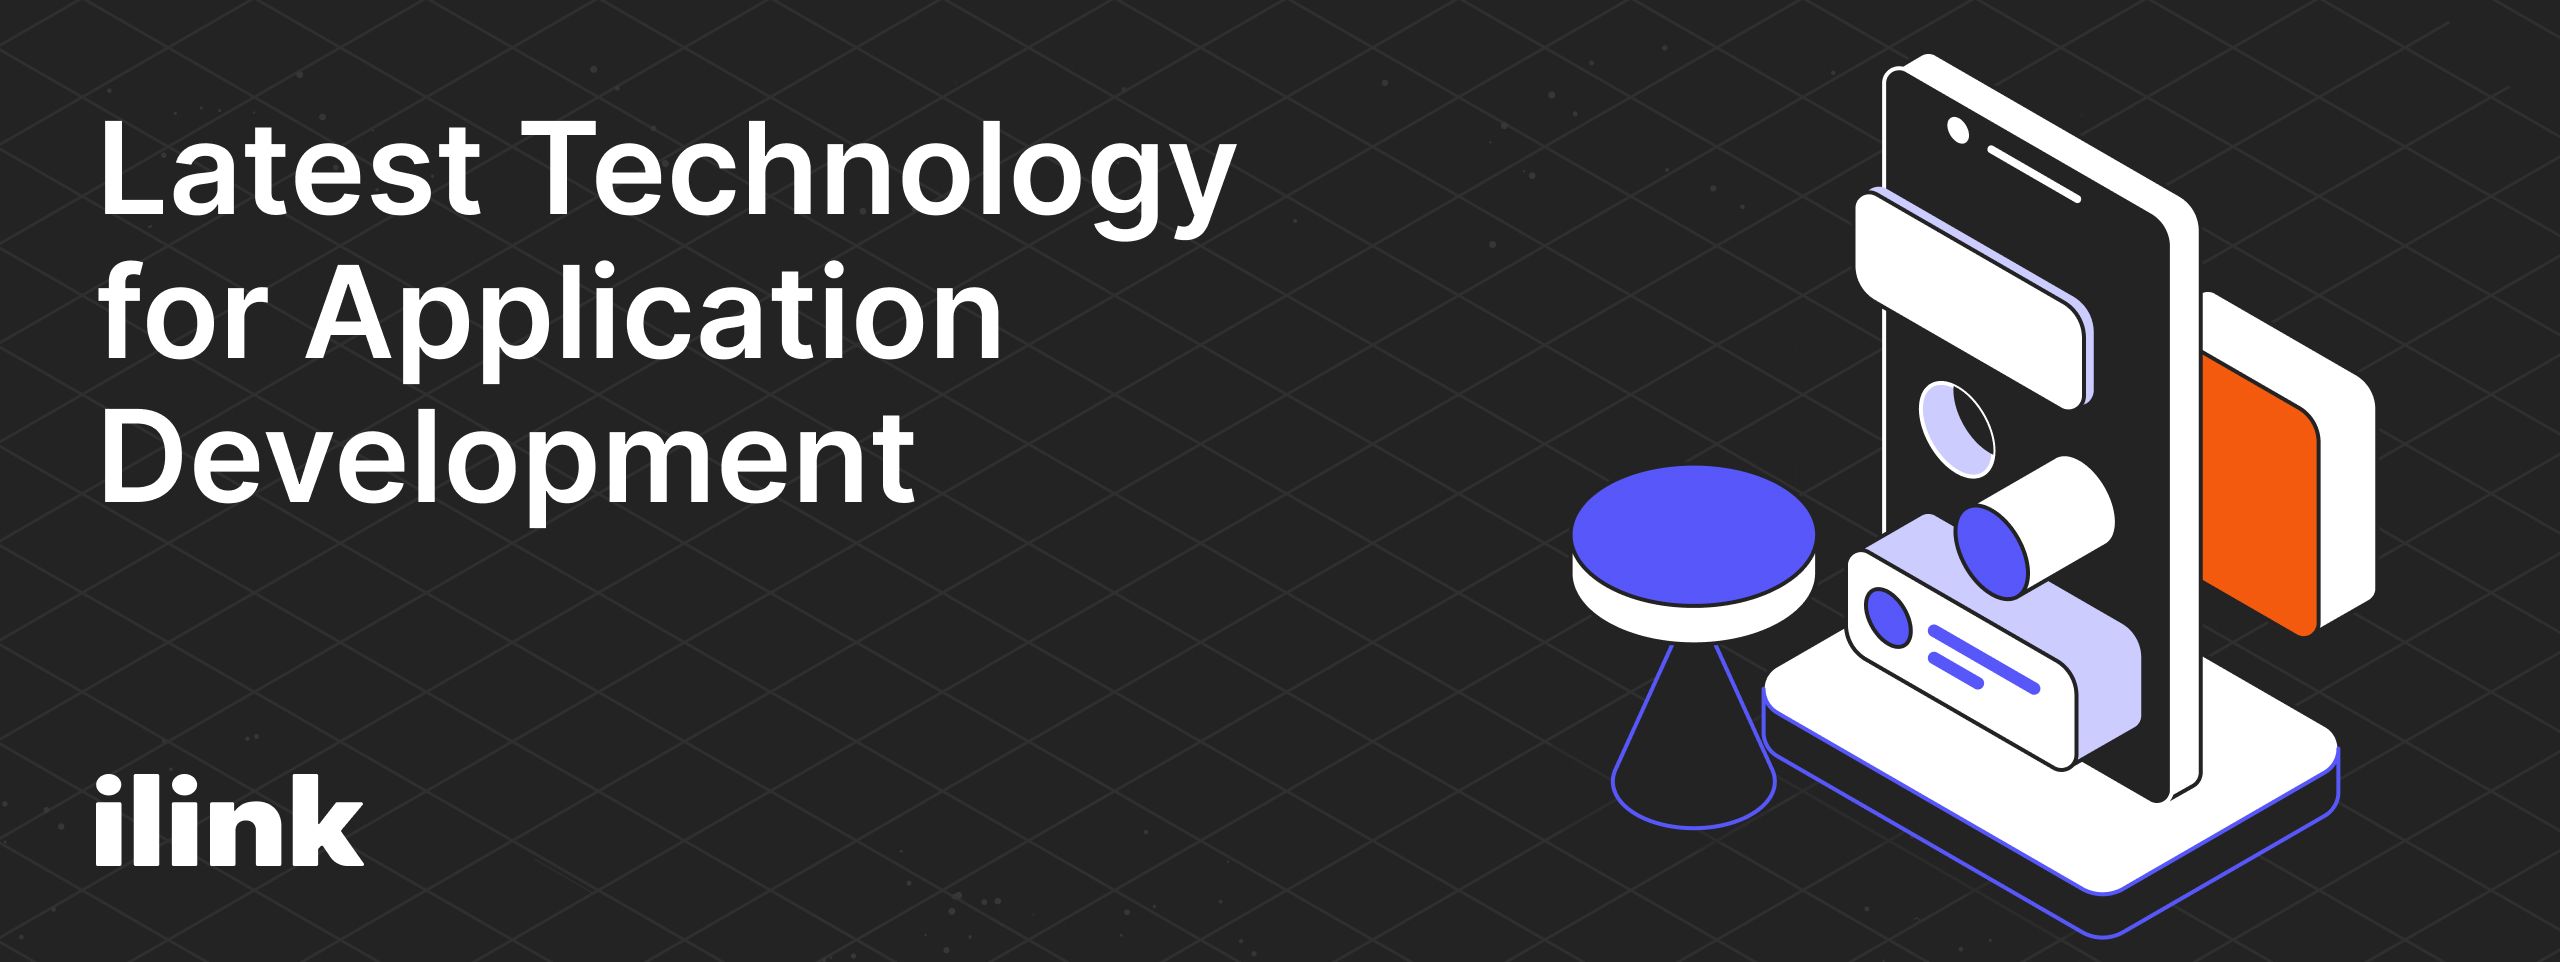 Latest Technology for Application Development image | ilink blog